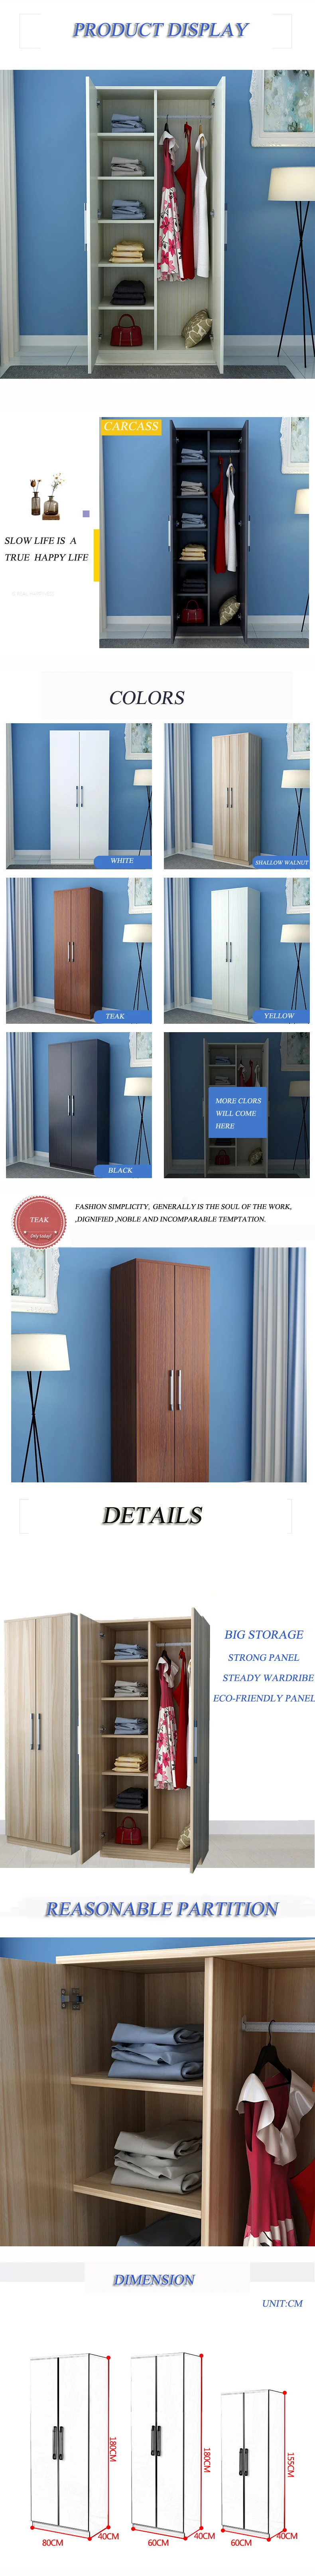 Modern luxury wooden wardrobe with melamine designs Customized simple Factory Price 2 Door Bedroom furniture